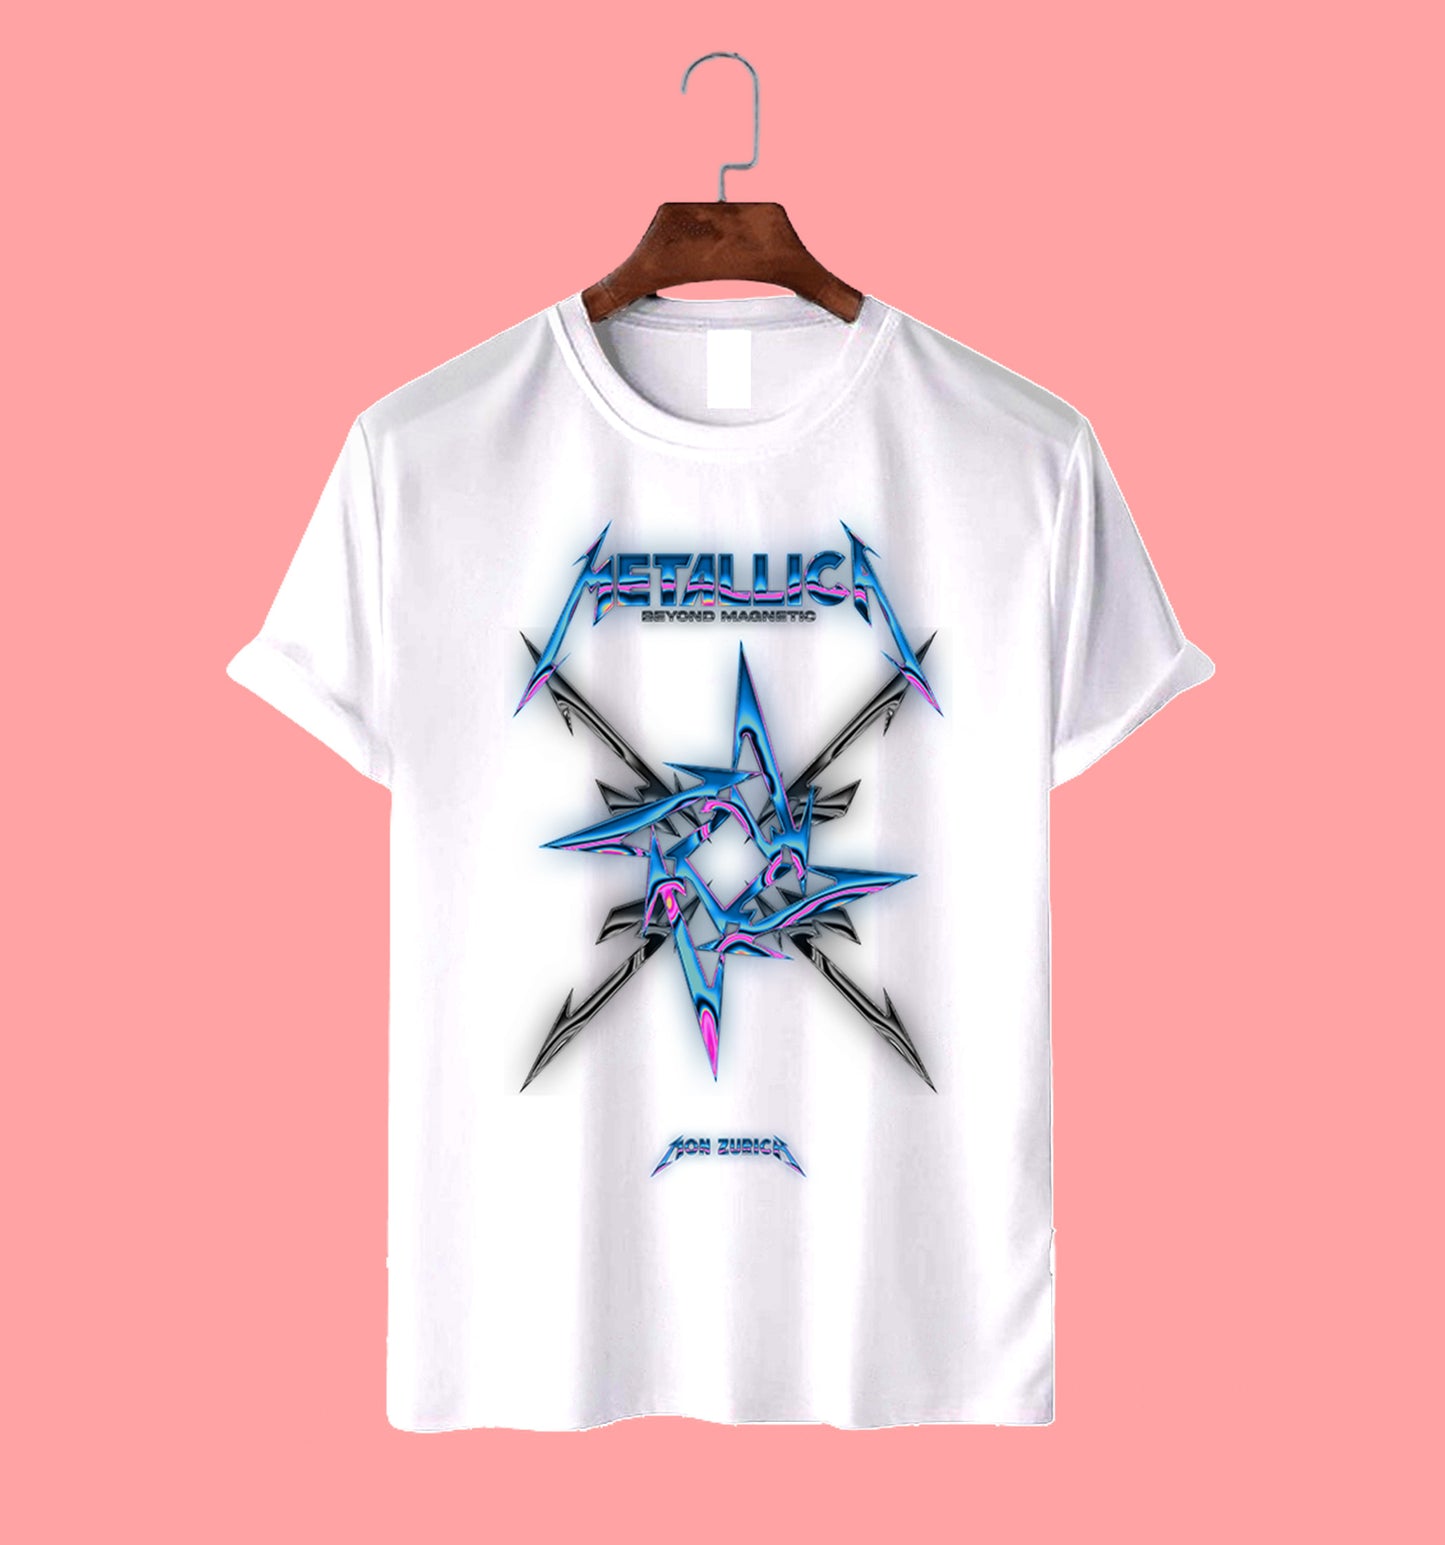 BEYOND MAGNETIC (METALLICA) T-shirt in Light - Mon Zurich Originals